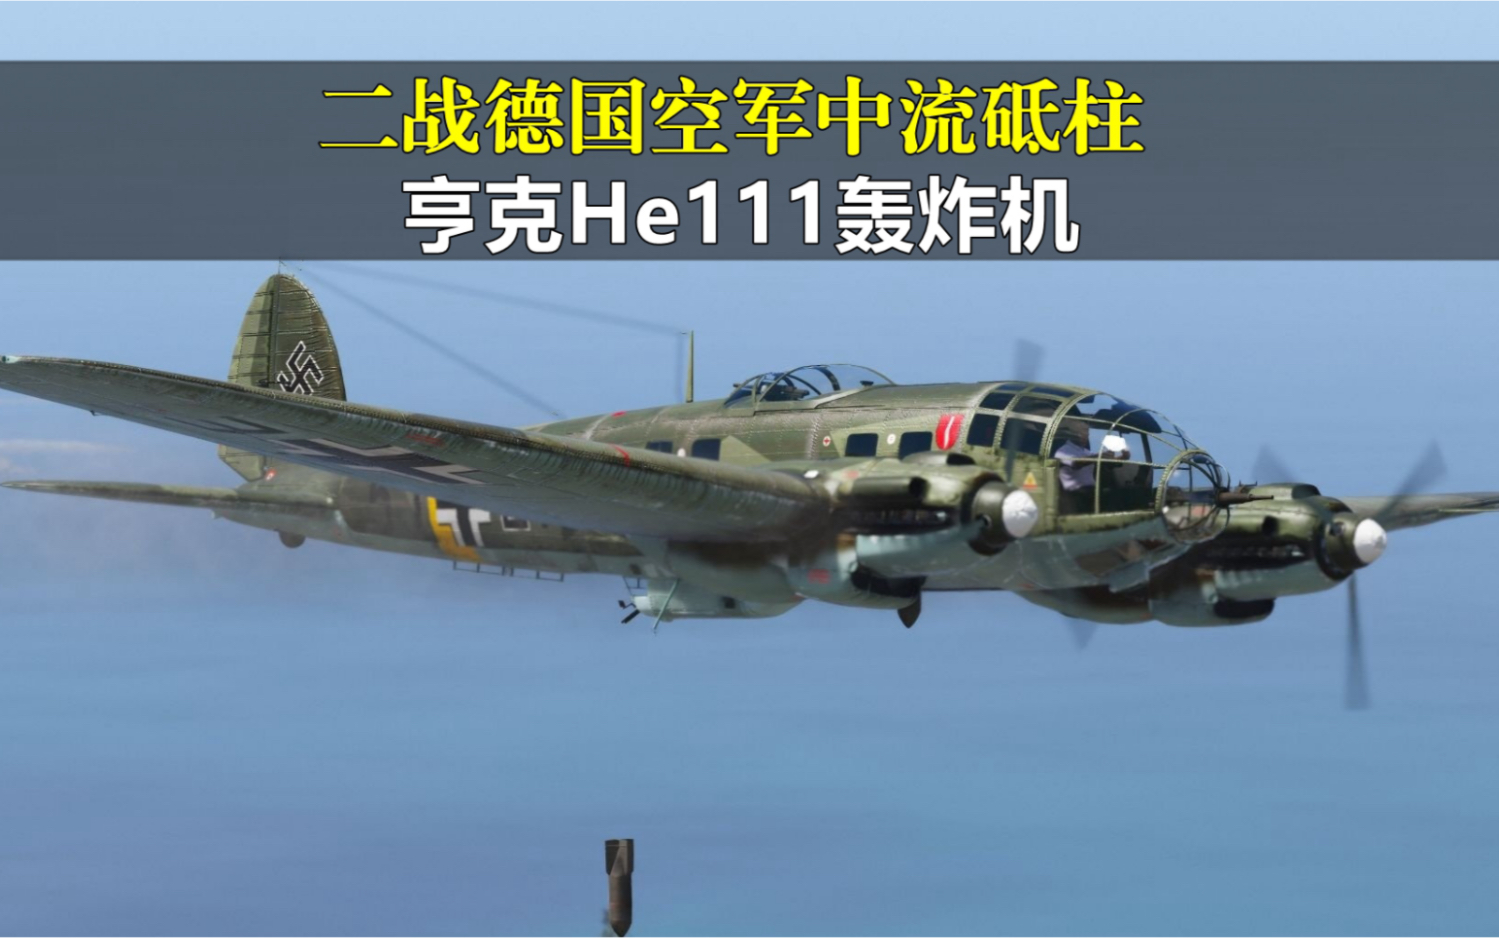 he111轰炸机内部图片